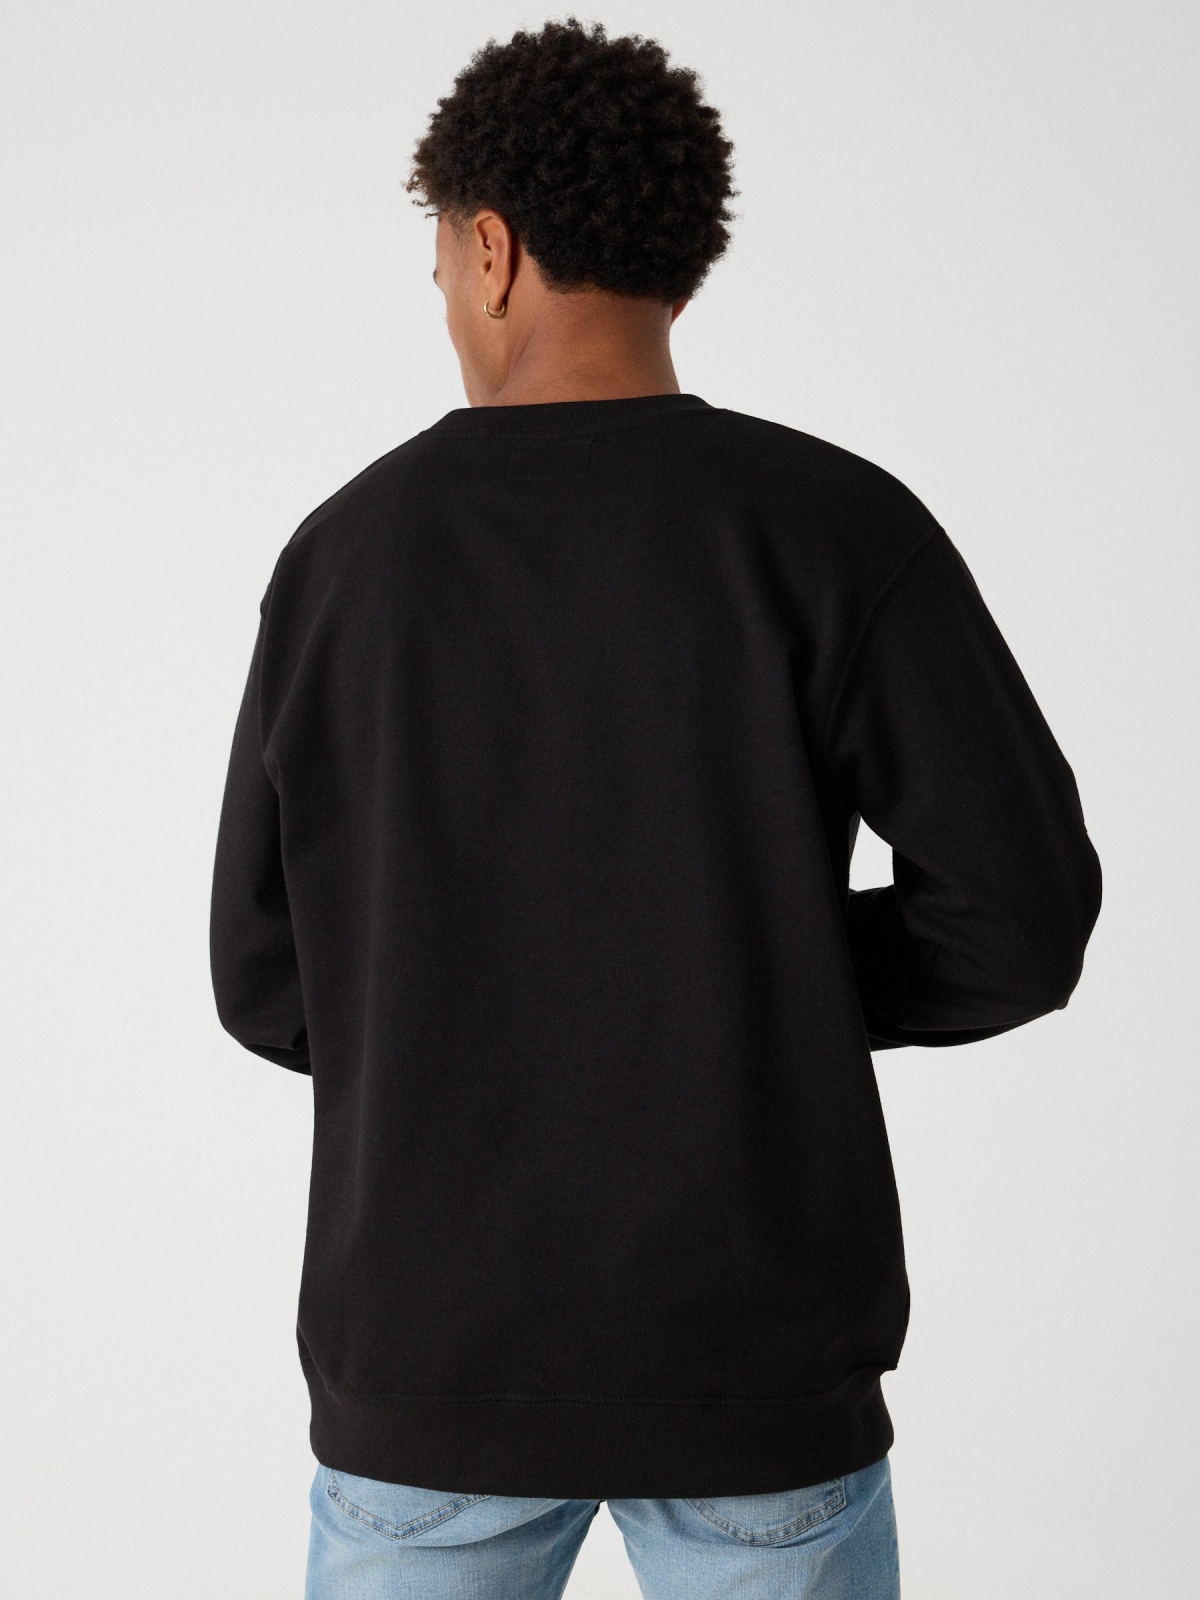 Gaming printed sweatshirt black middle back view